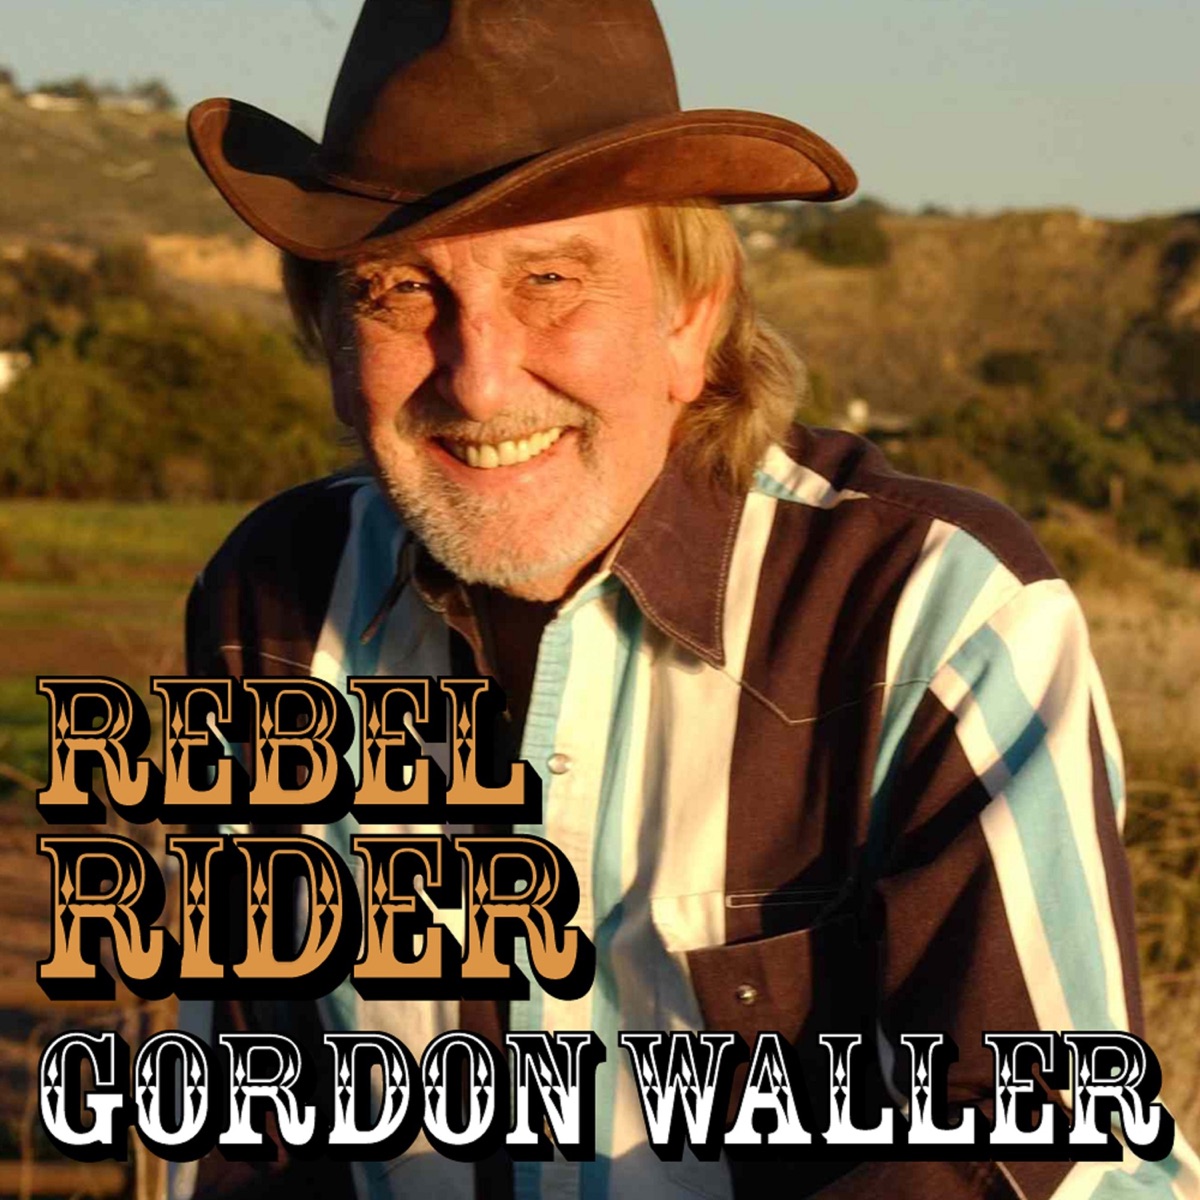 Rebel Rider - Single - Album by Gordon Waller - Apple Music